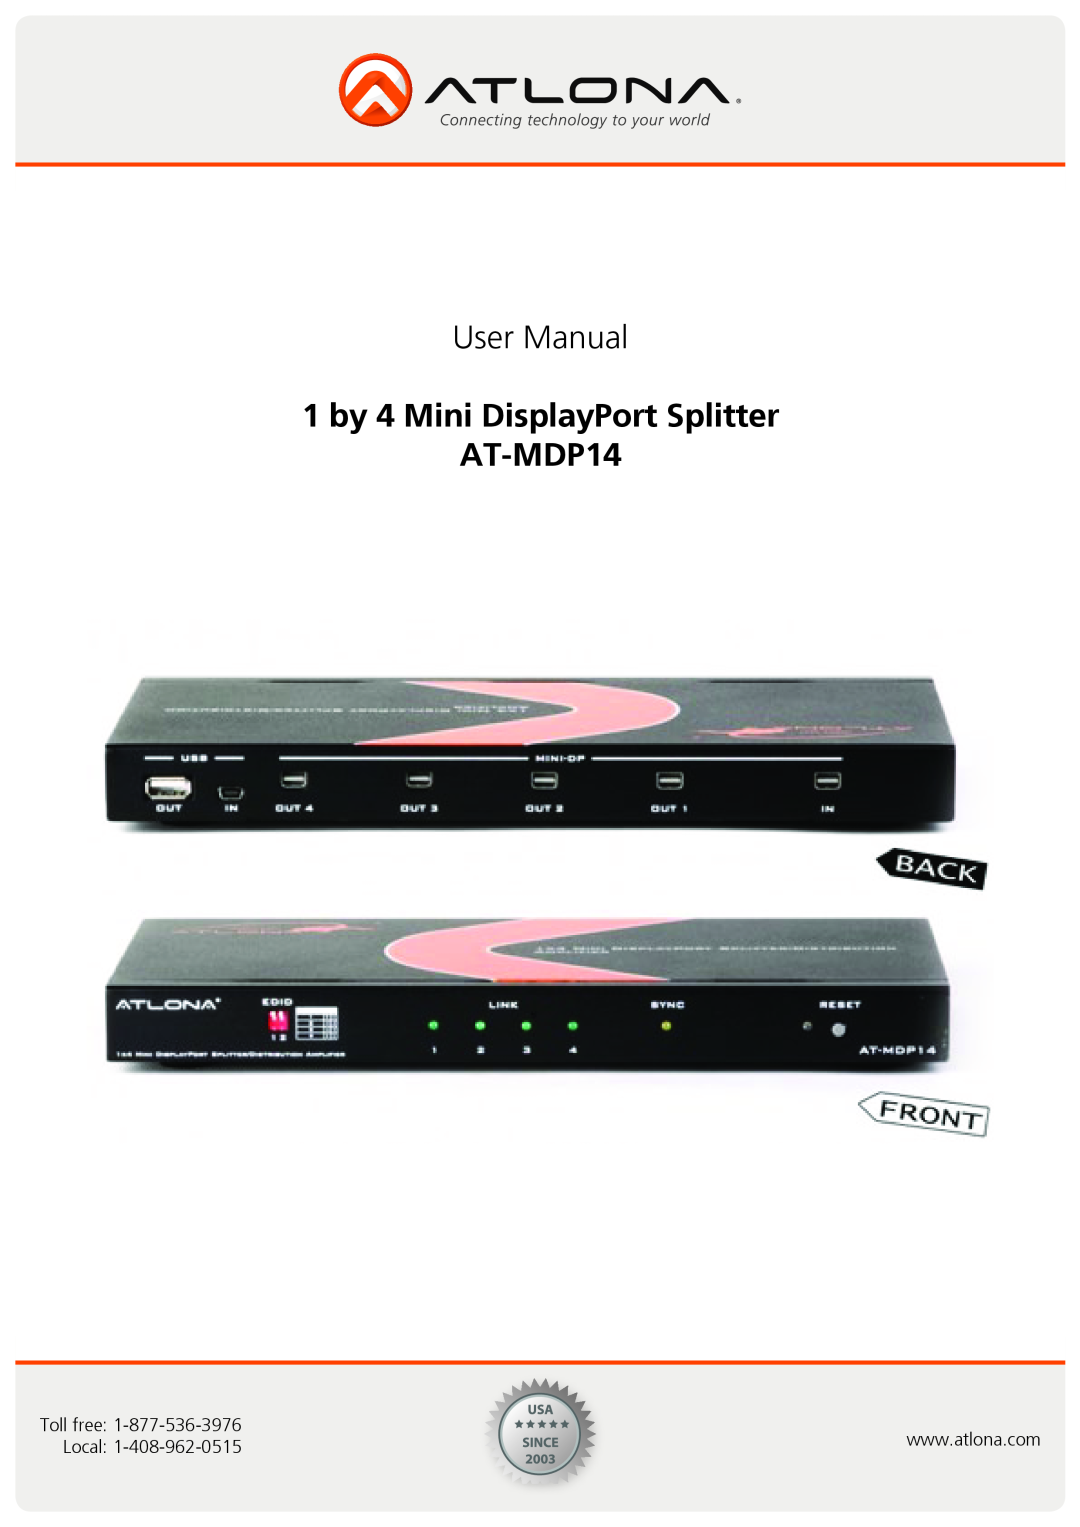 Atlona user manual 1 by 4 Mini DisplayPort Splitter AT-MDP14, Toll free, Local 